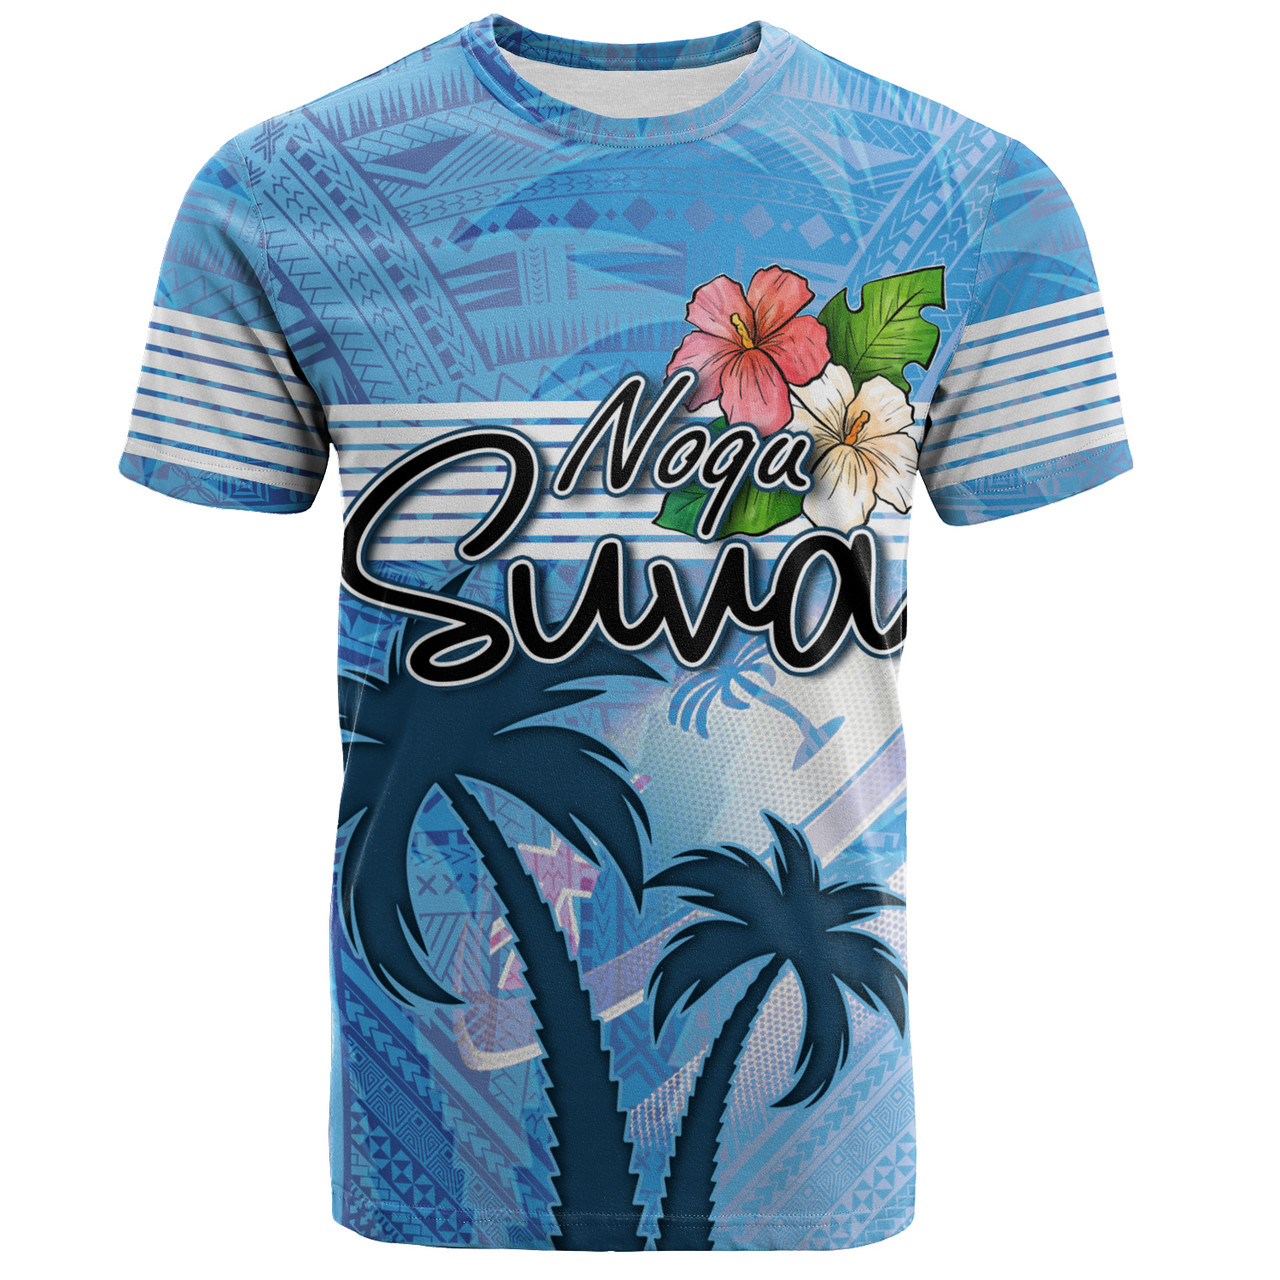 Fiji T-Shirt Noqu Suva Palm Tree Traditional Patterns